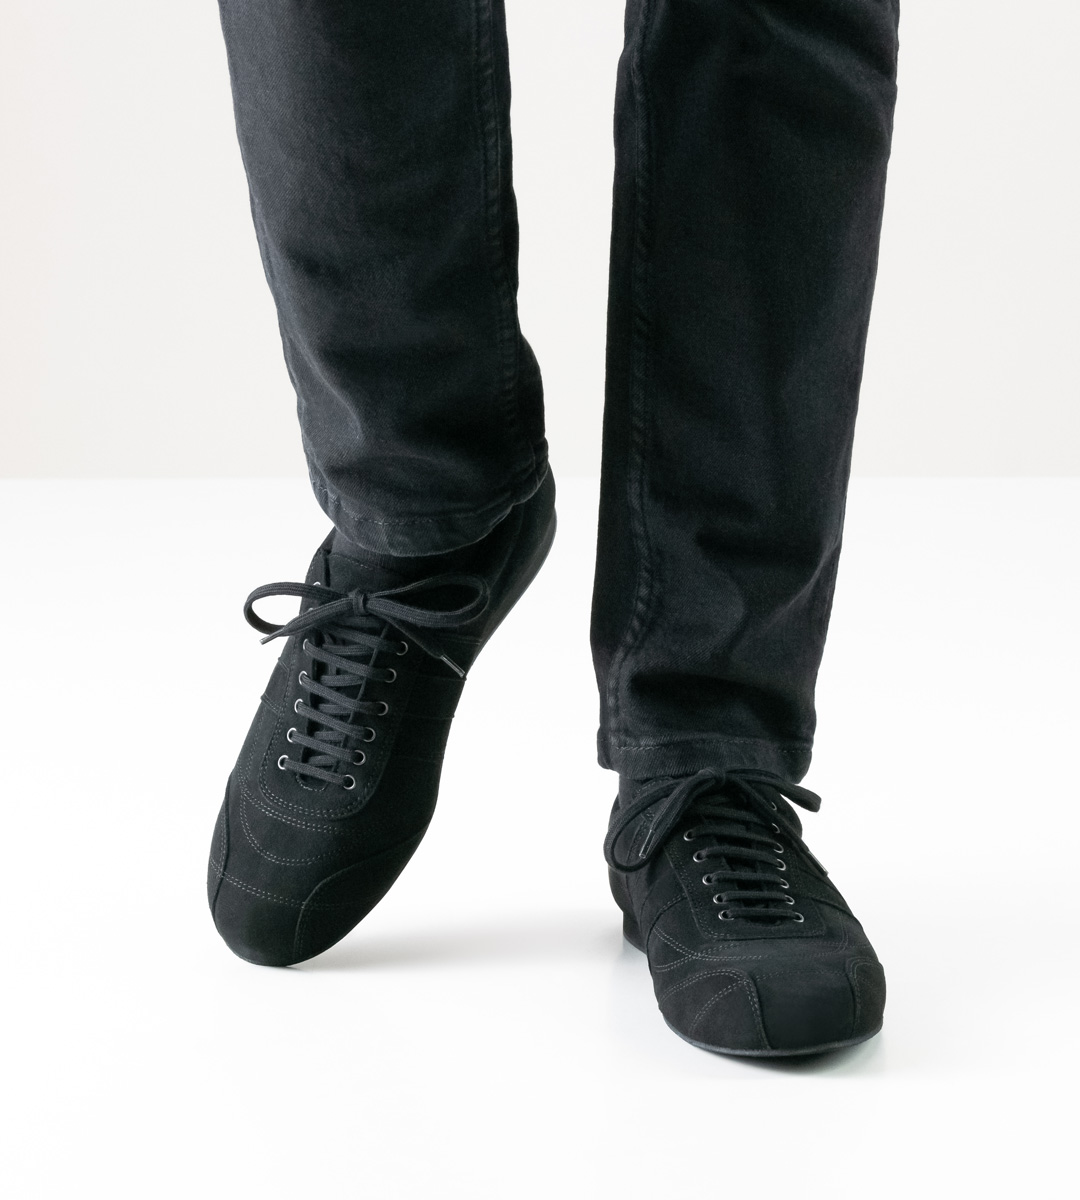 black jeans in combination with men's dance shoe sneaker in black